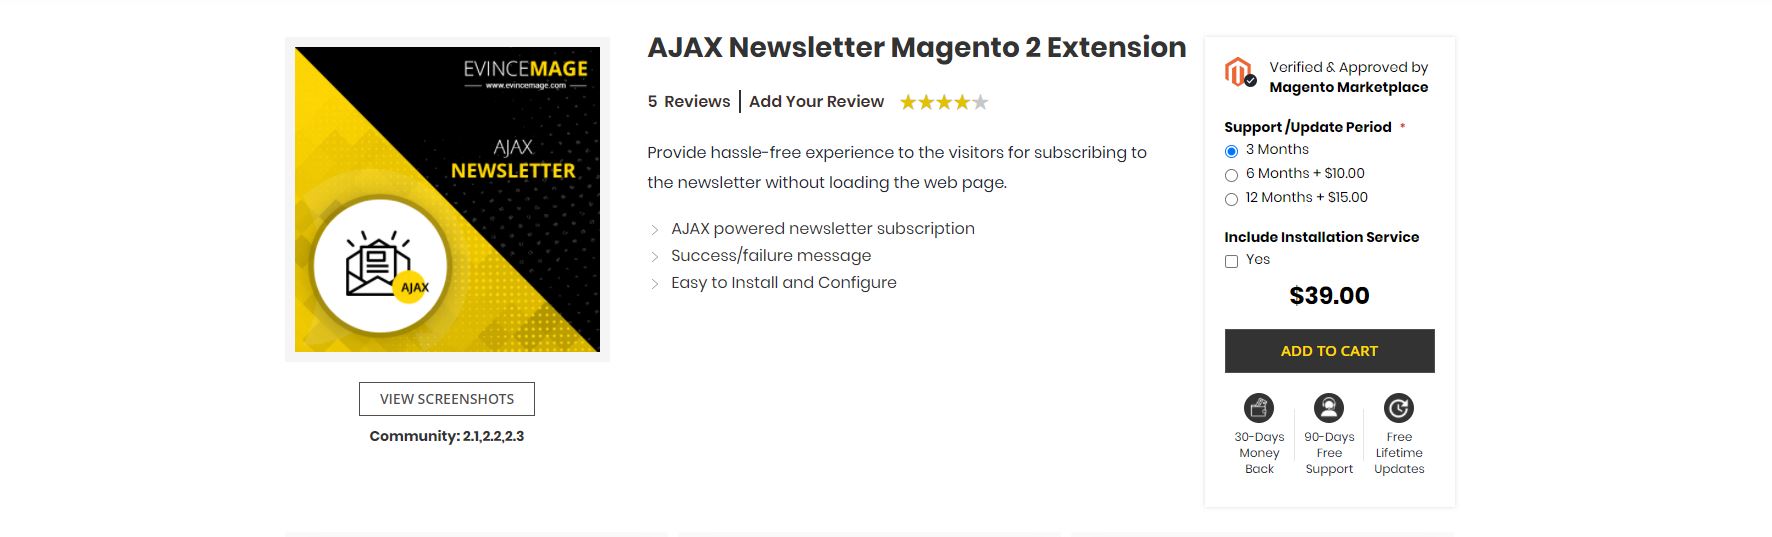 Magento newsletter extension